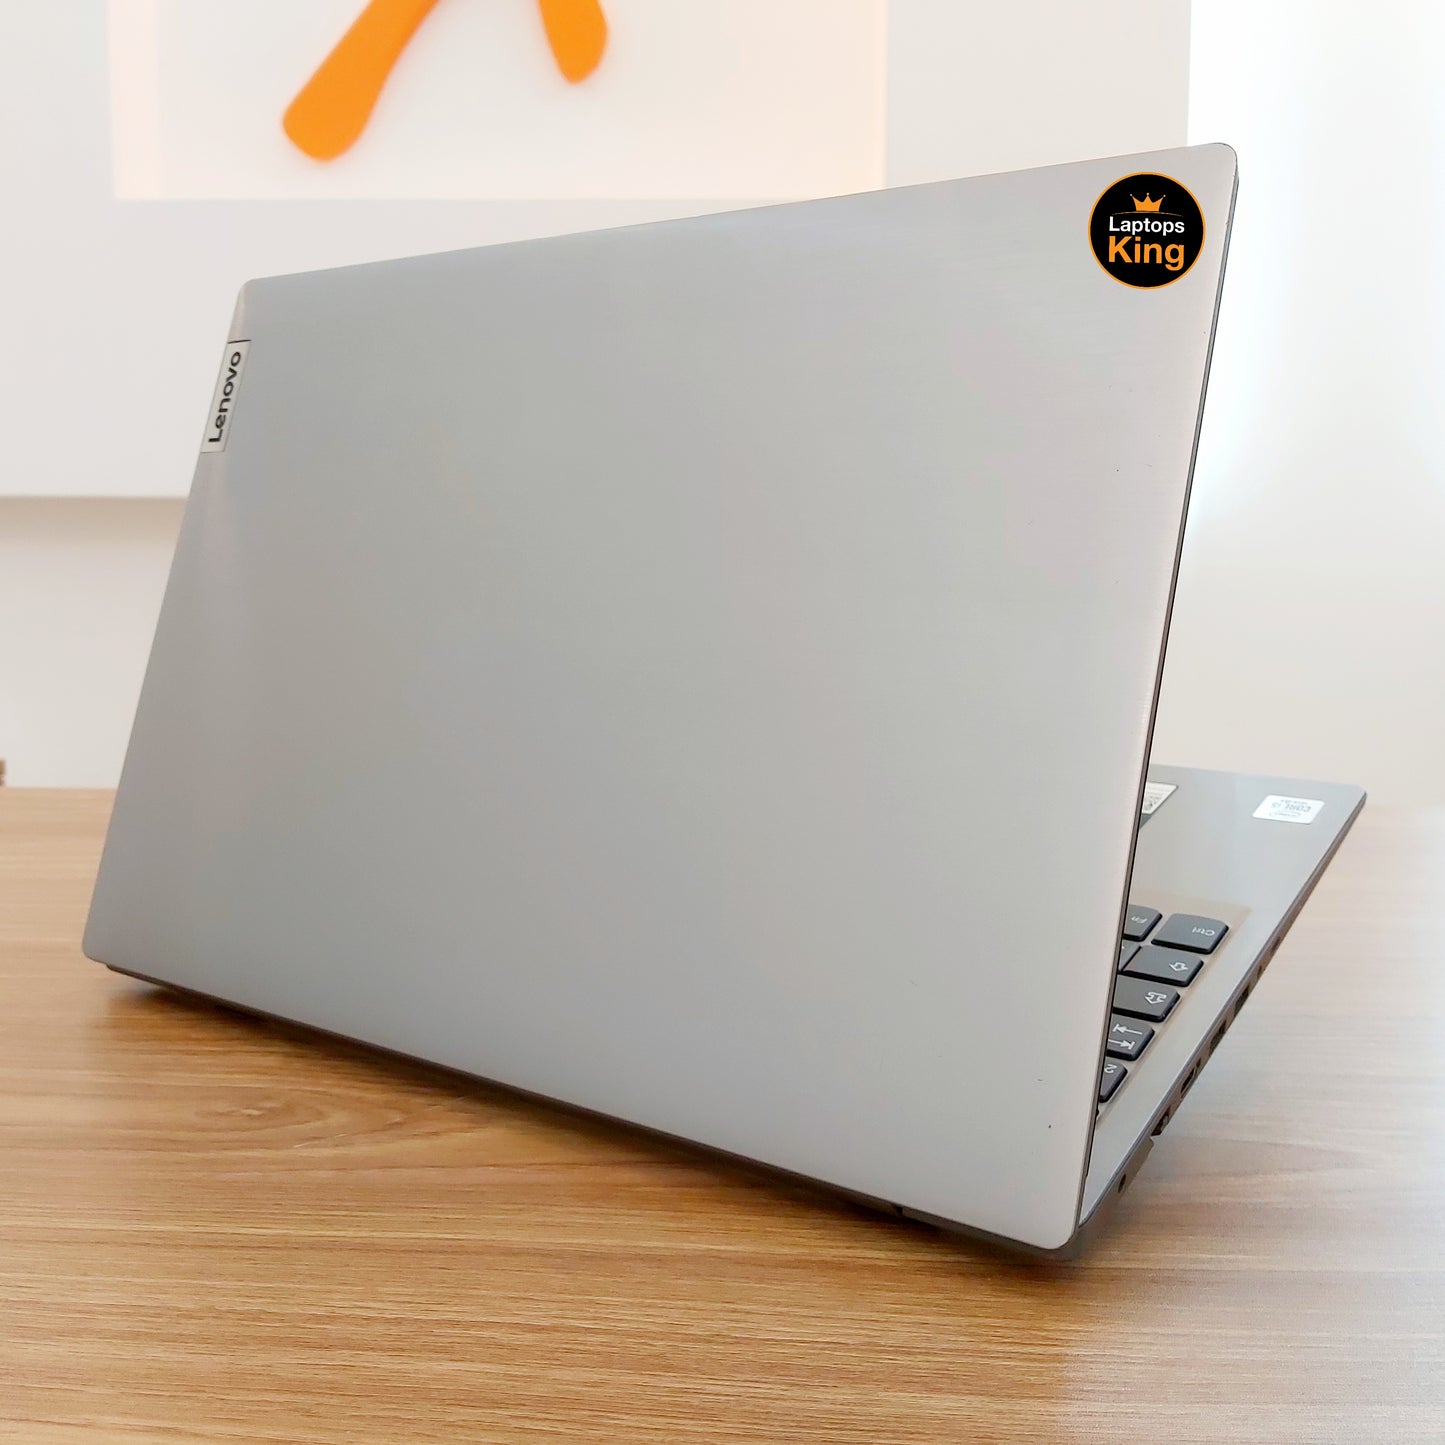 Lenovo IdeaPad L3 81y3 i5-10210u Laptop (Used Very Clean)